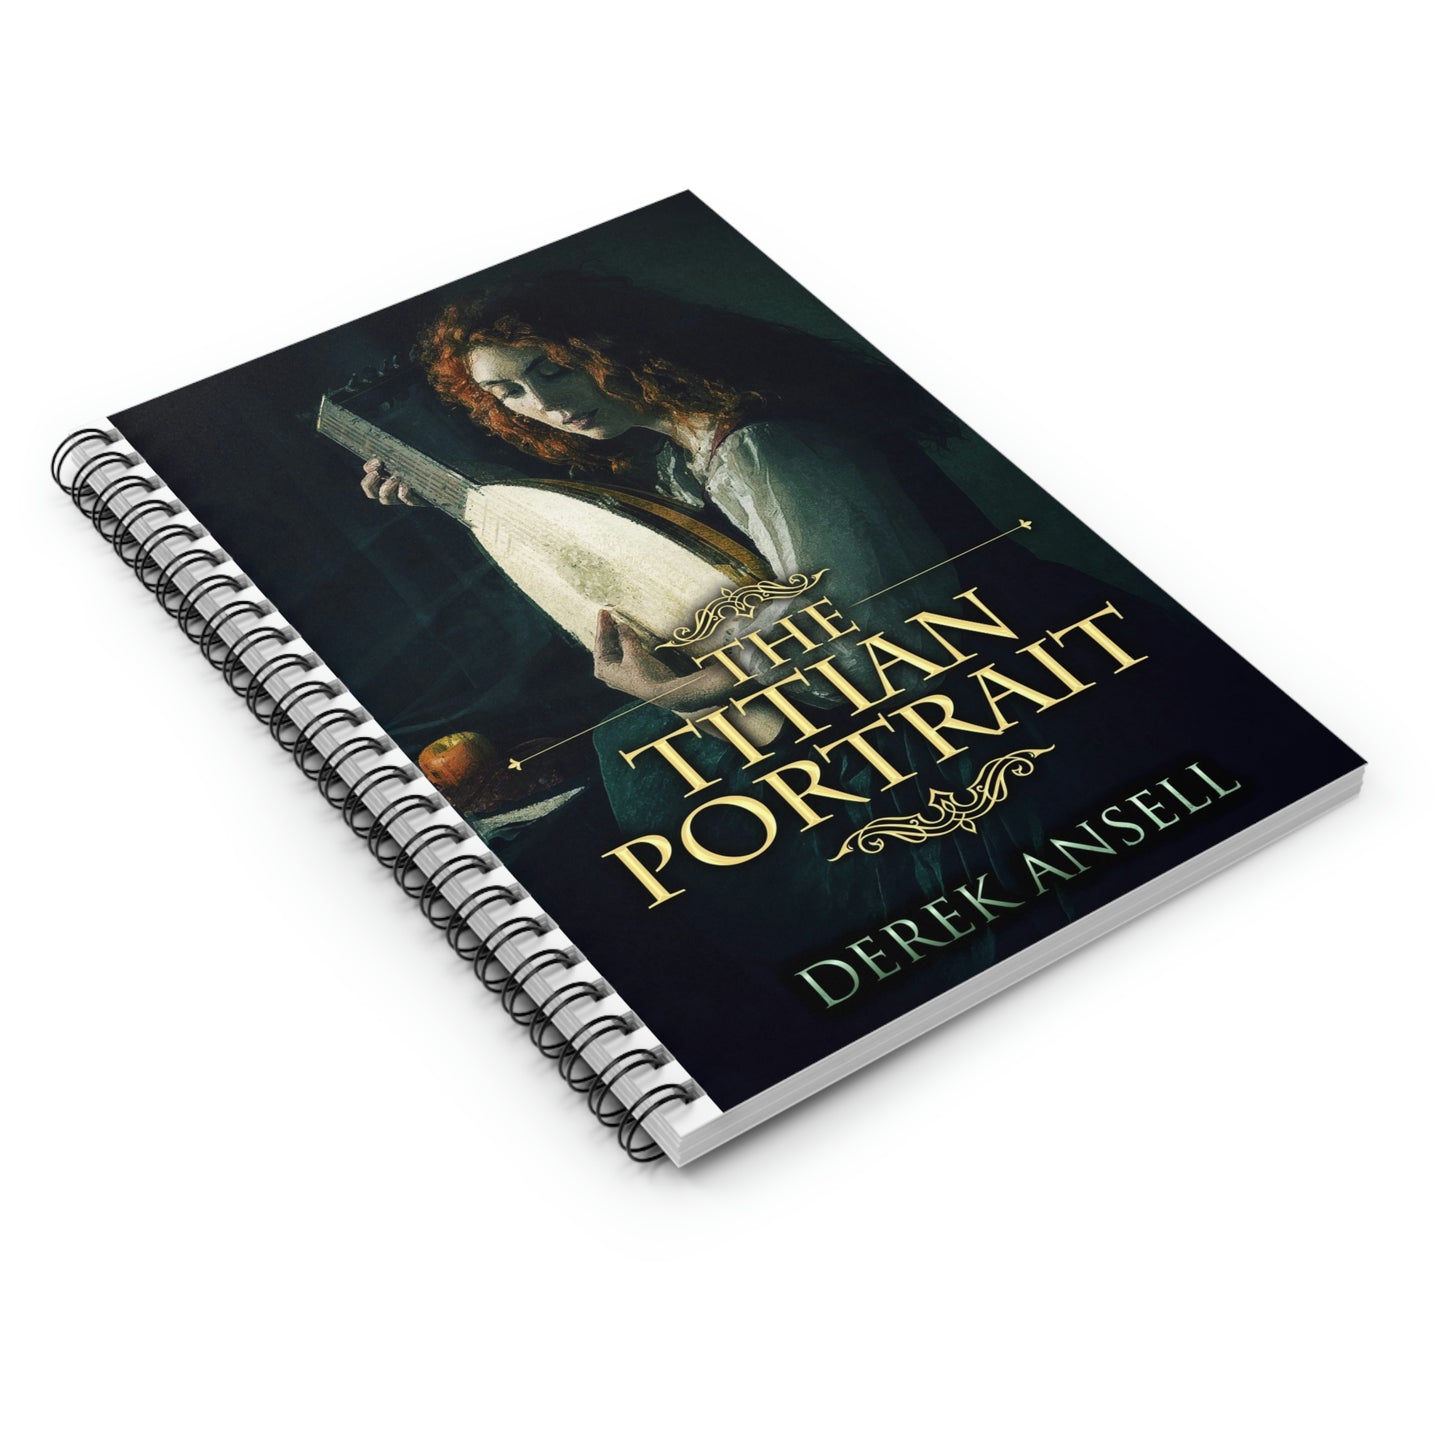 The Titian Portrait - Spiral Notebook